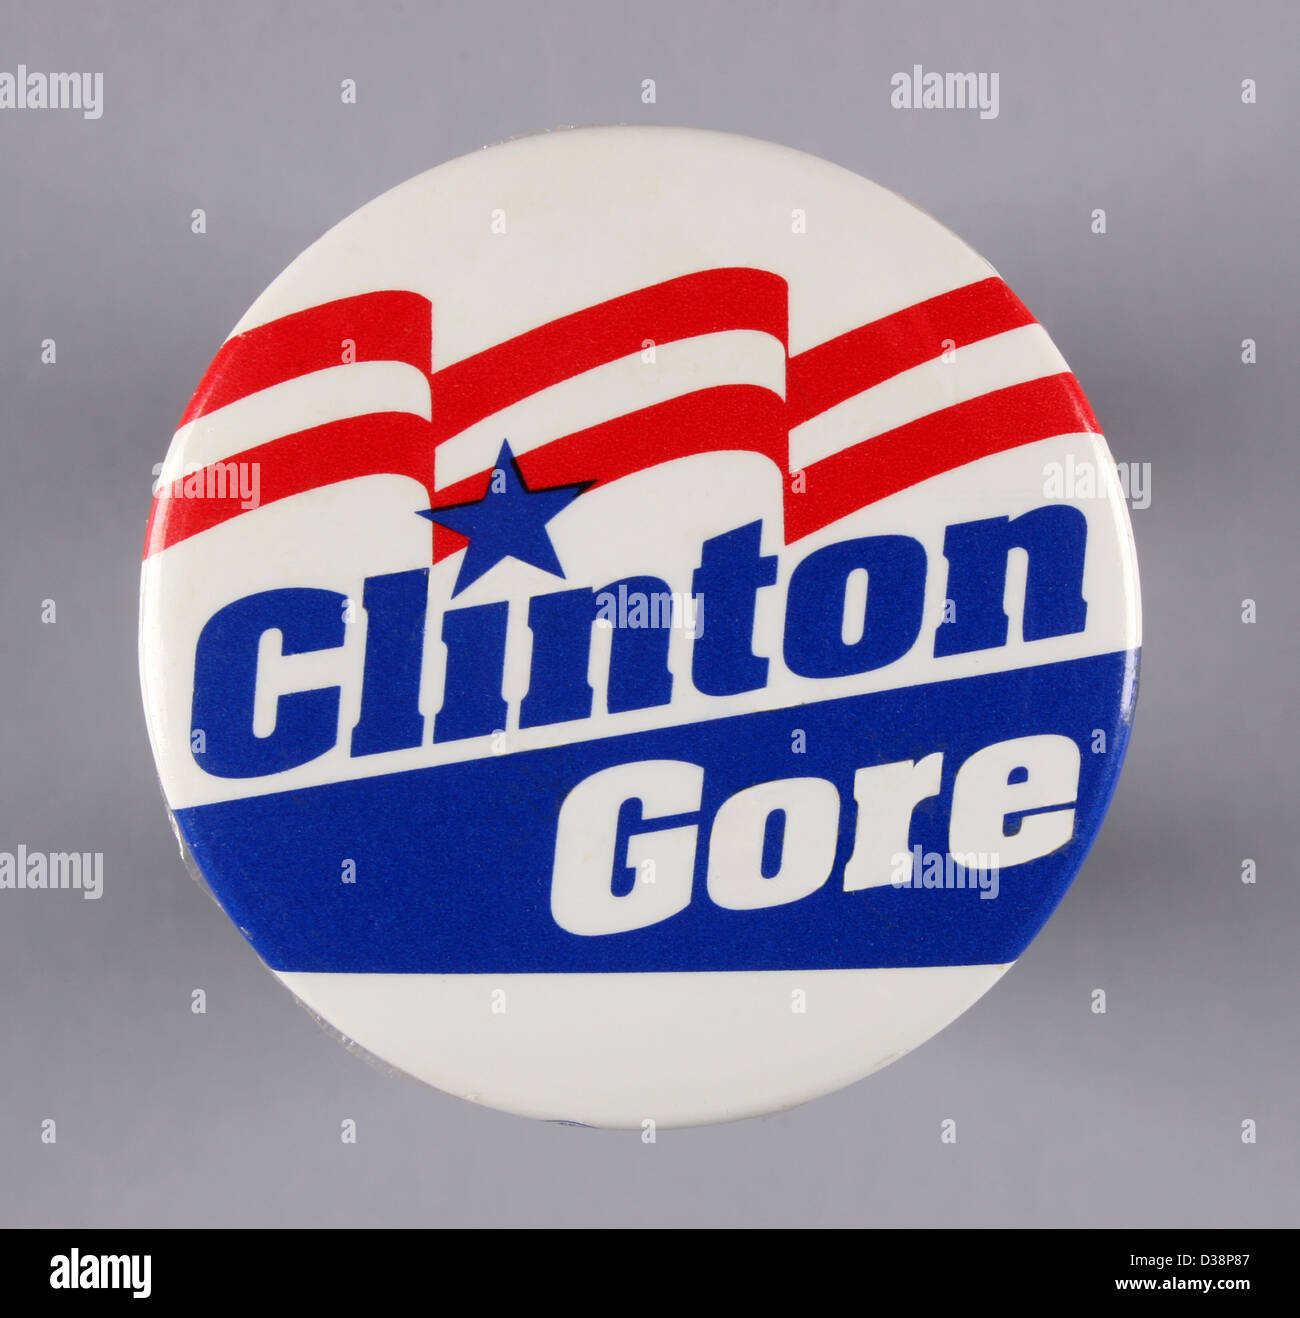 1992 United States presidential campaign button pin for democratic candidates Bill Clinton and Al Gore Stock Photo